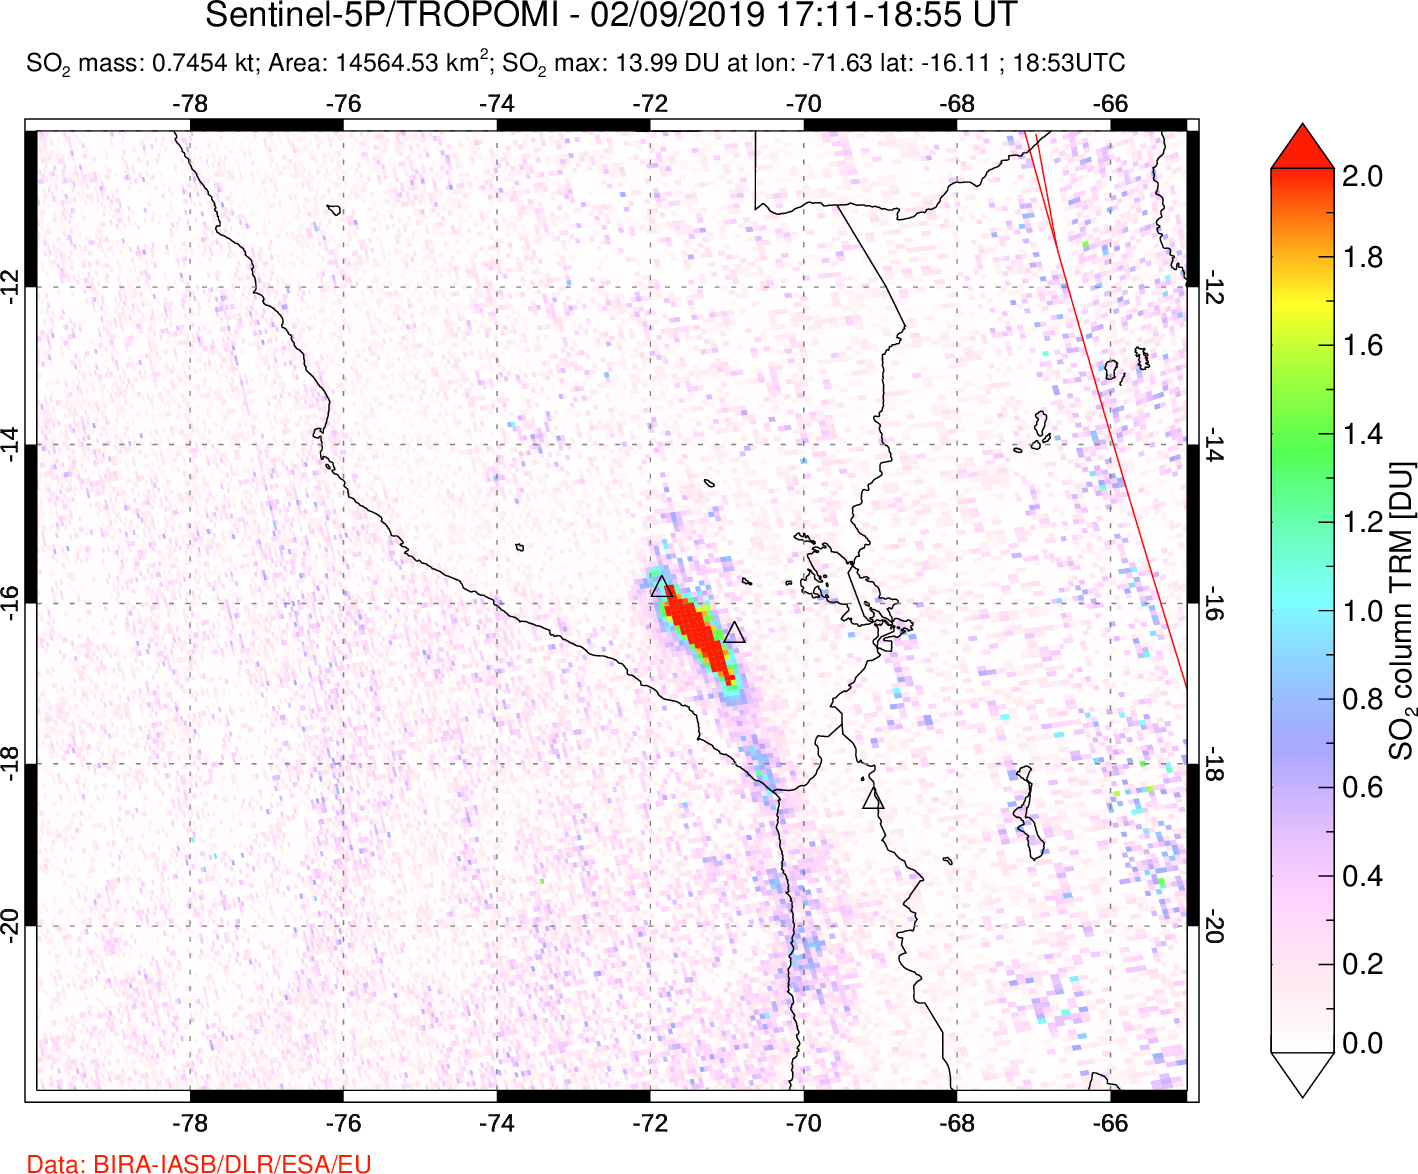 A sulfur dioxide image over Peru on Feb 09, 2019.